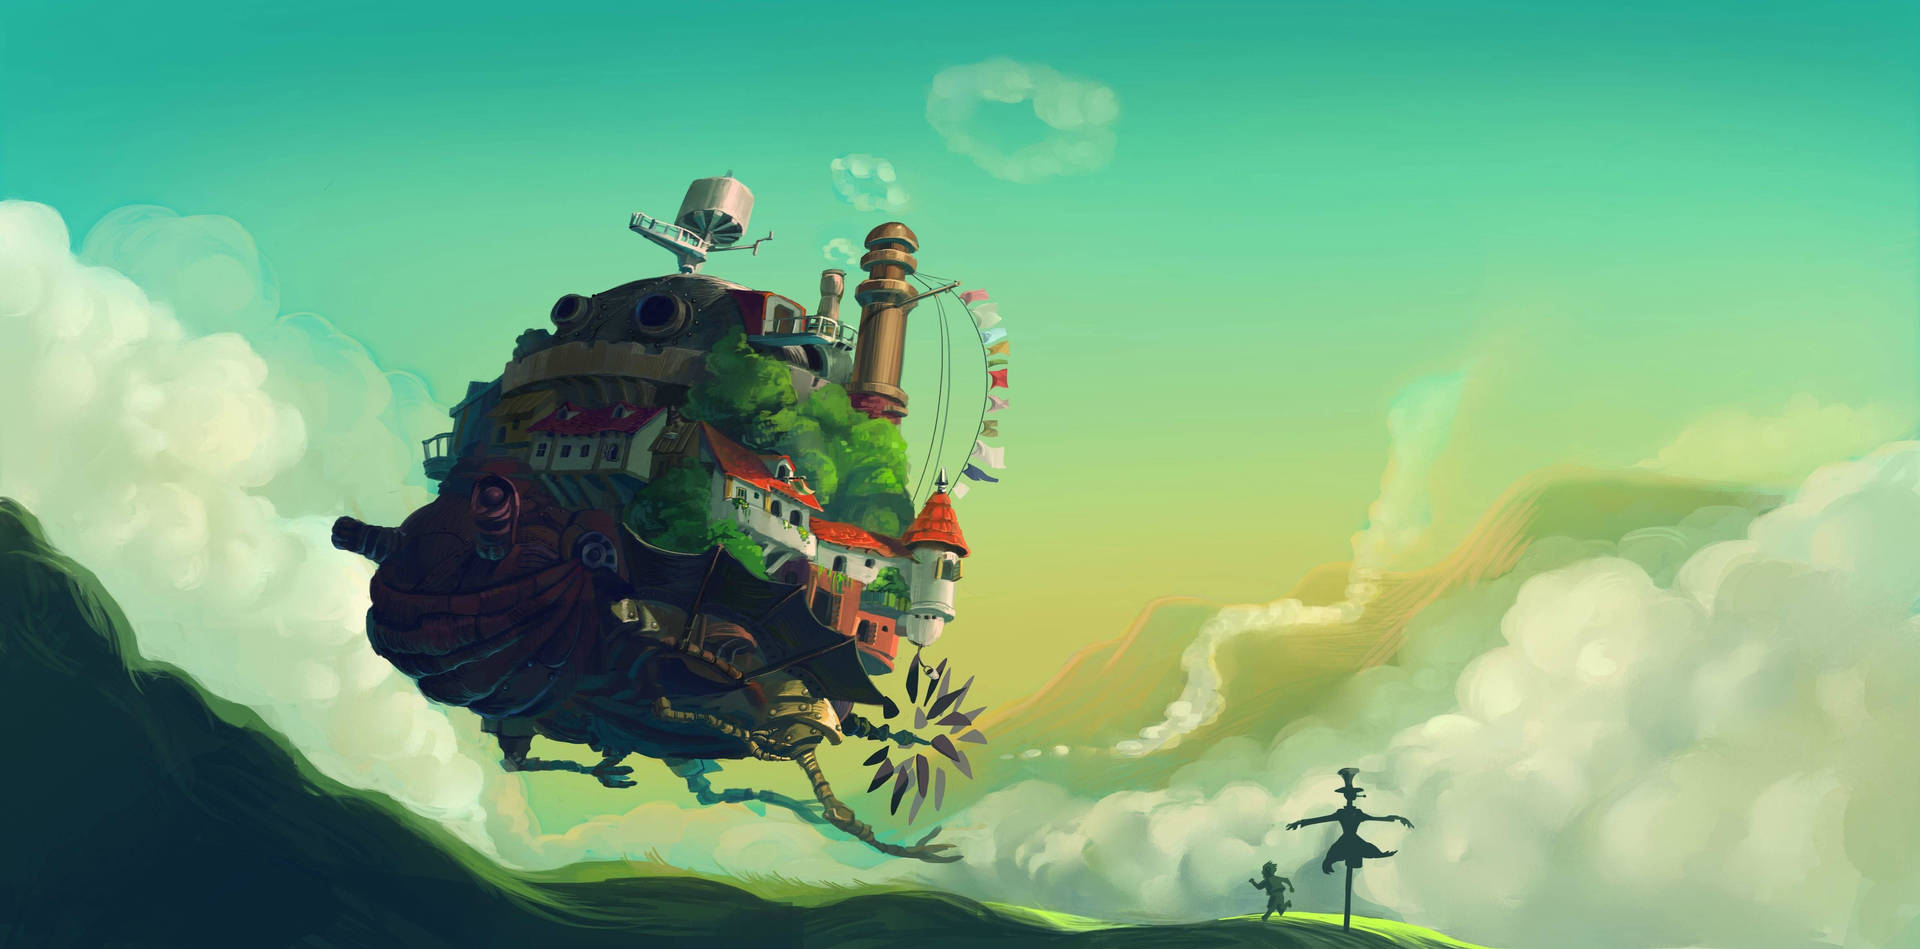 Studio Ghibli Howl's Moving Castle Background